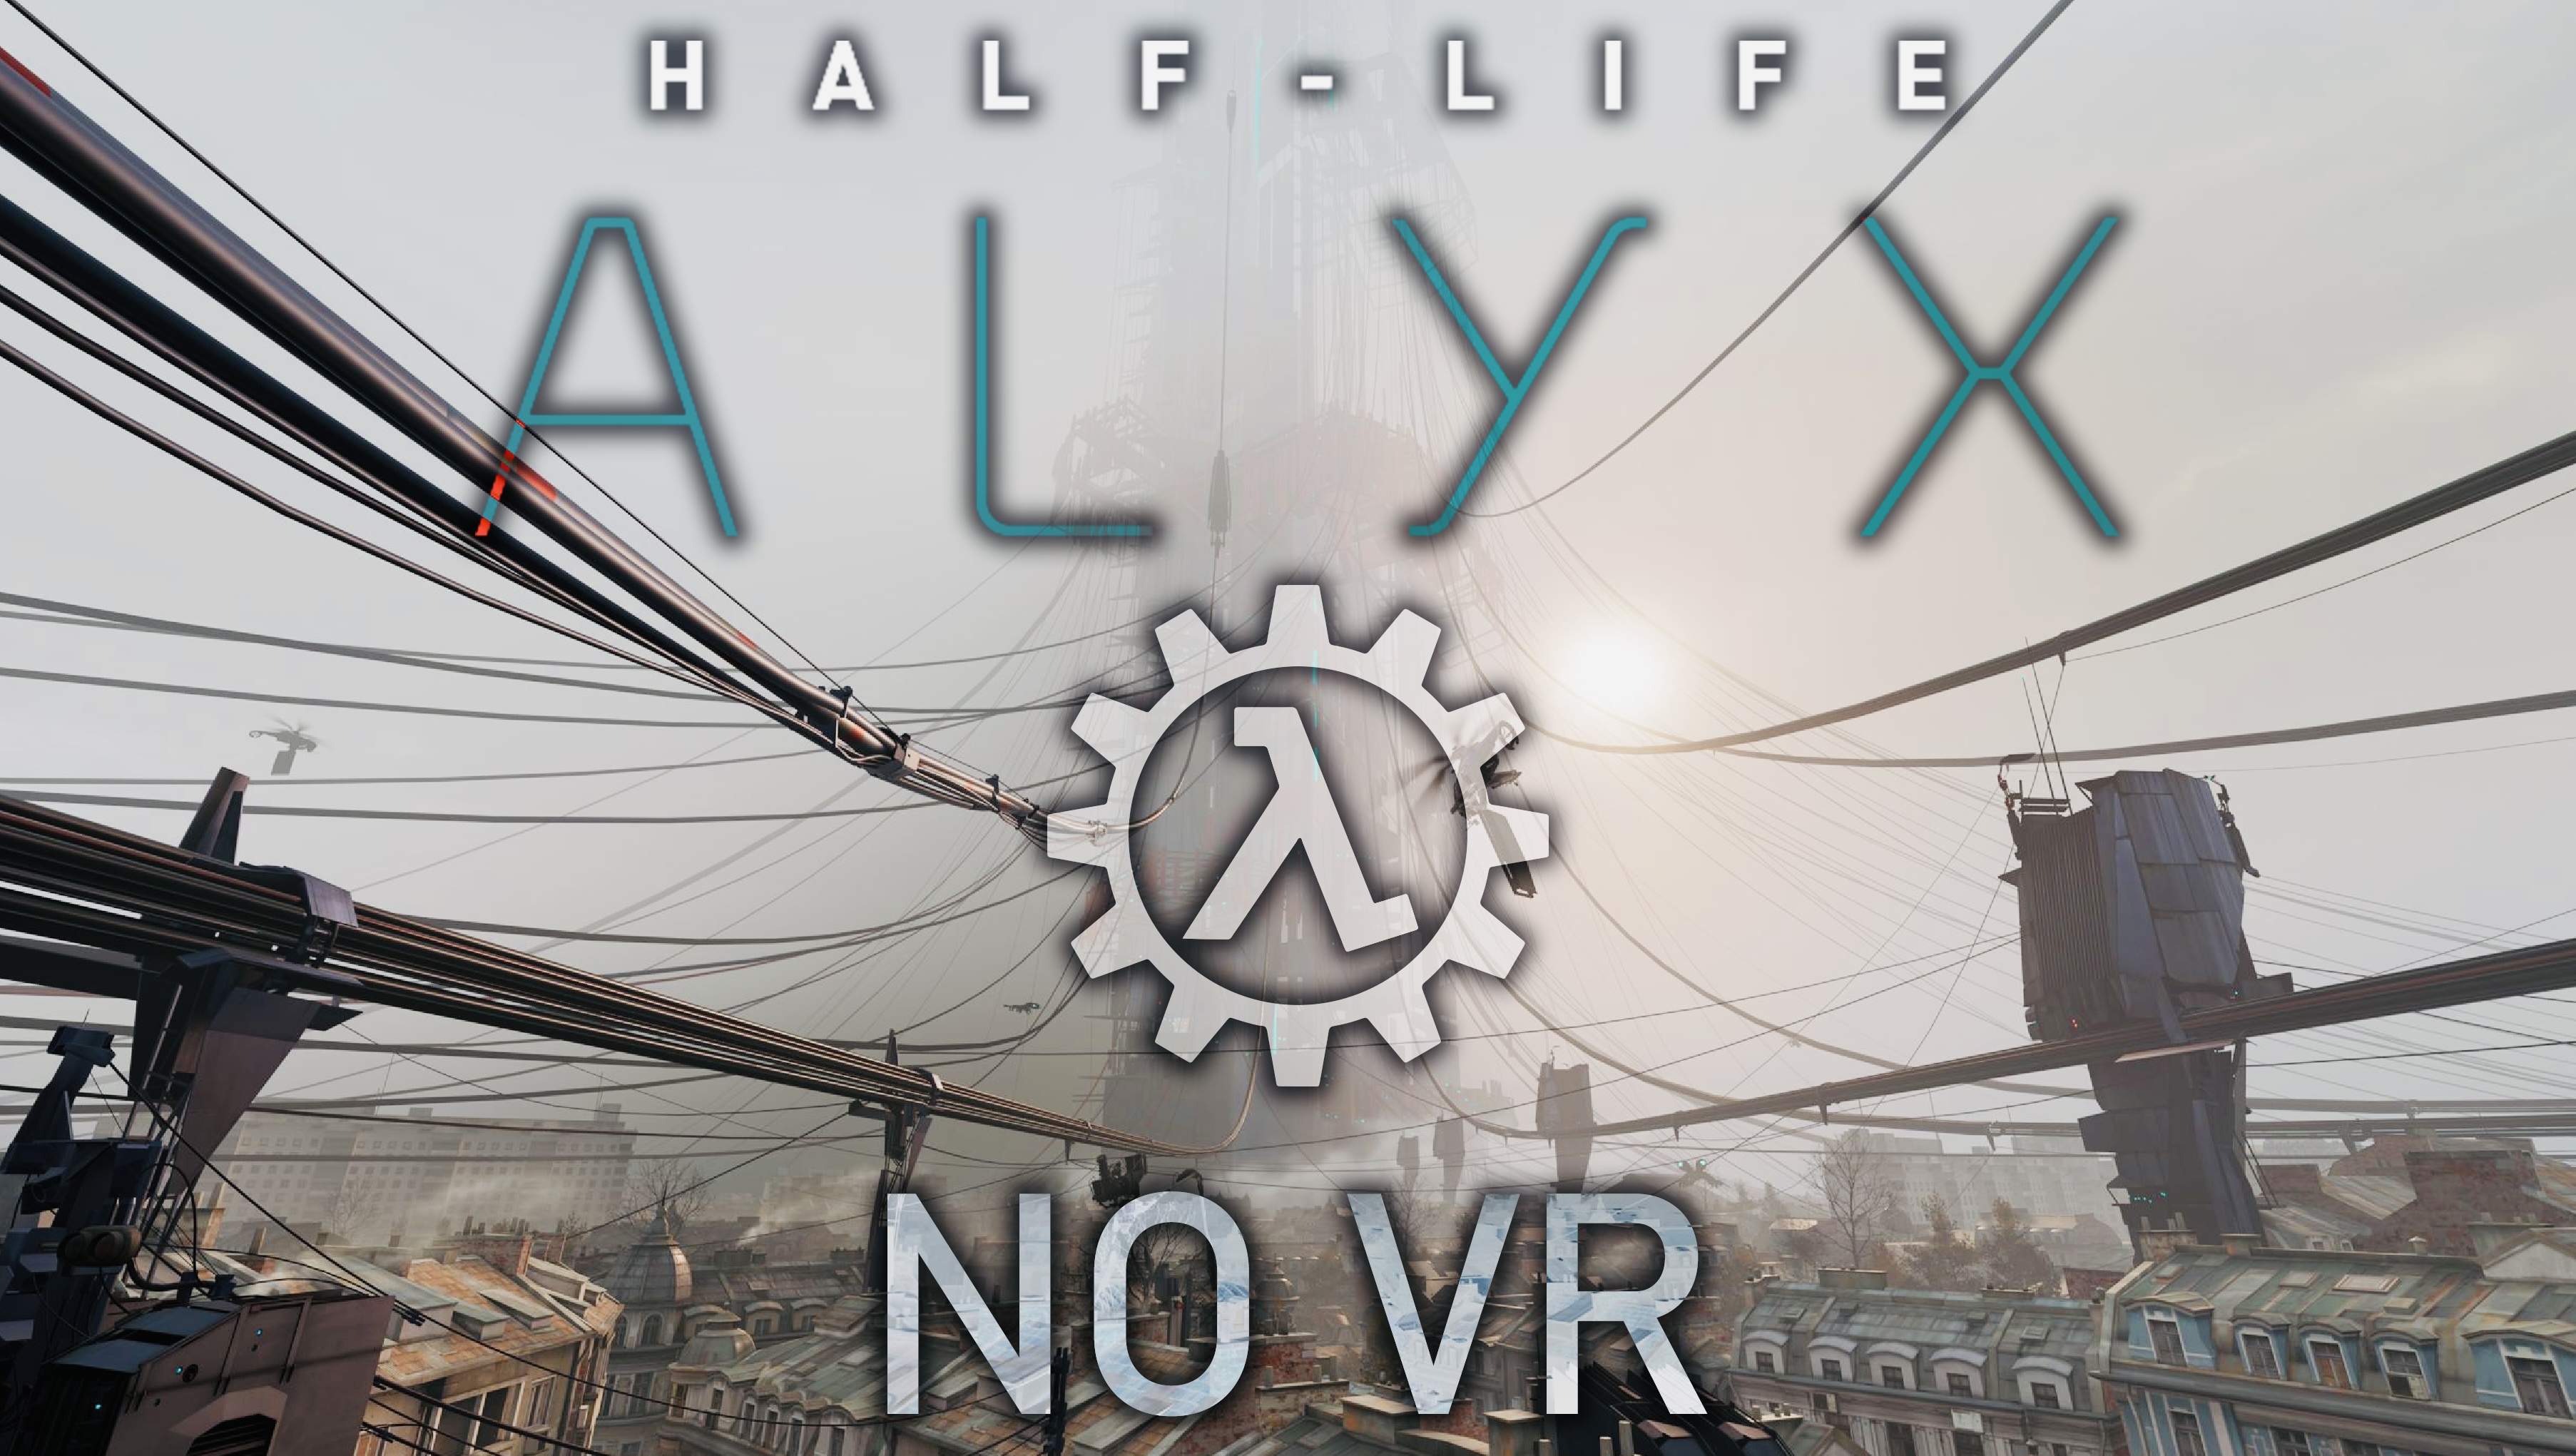 GitHub - r57zone/Half-Life-Alyx-novr: SteamVR driver for Half-Life-Alyx for  playing without VR / драйвер для игры без VR